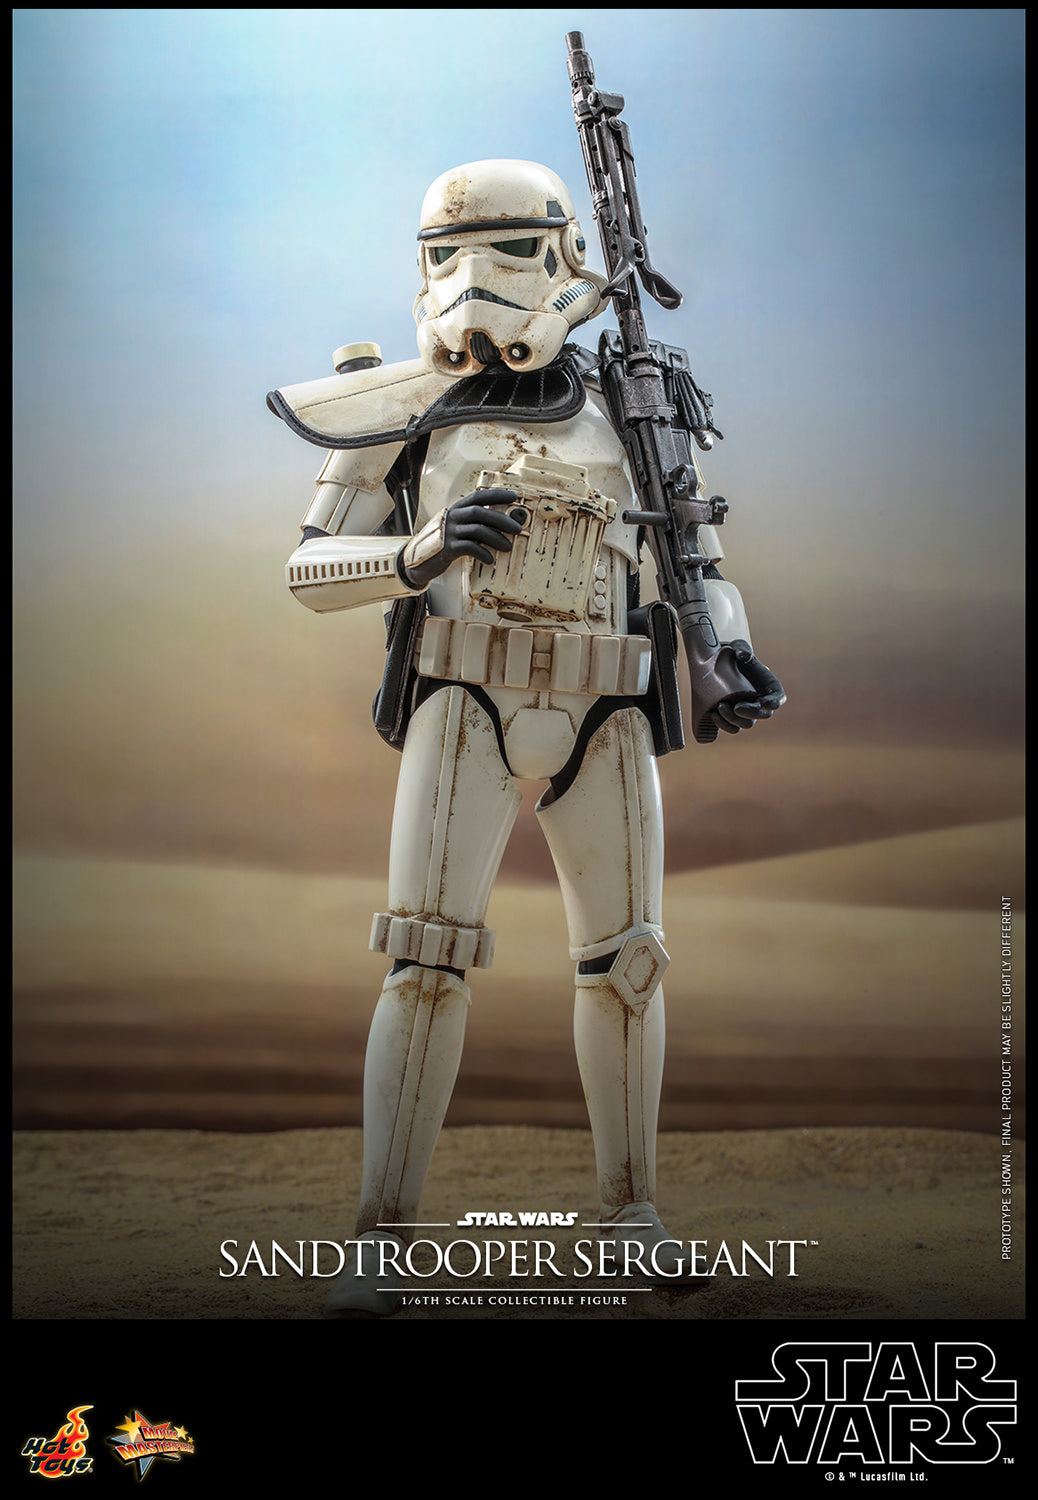 Dewback Deluxe & Sandtrooper Sergeant: Star Wars: A New Hope: Hot Toys